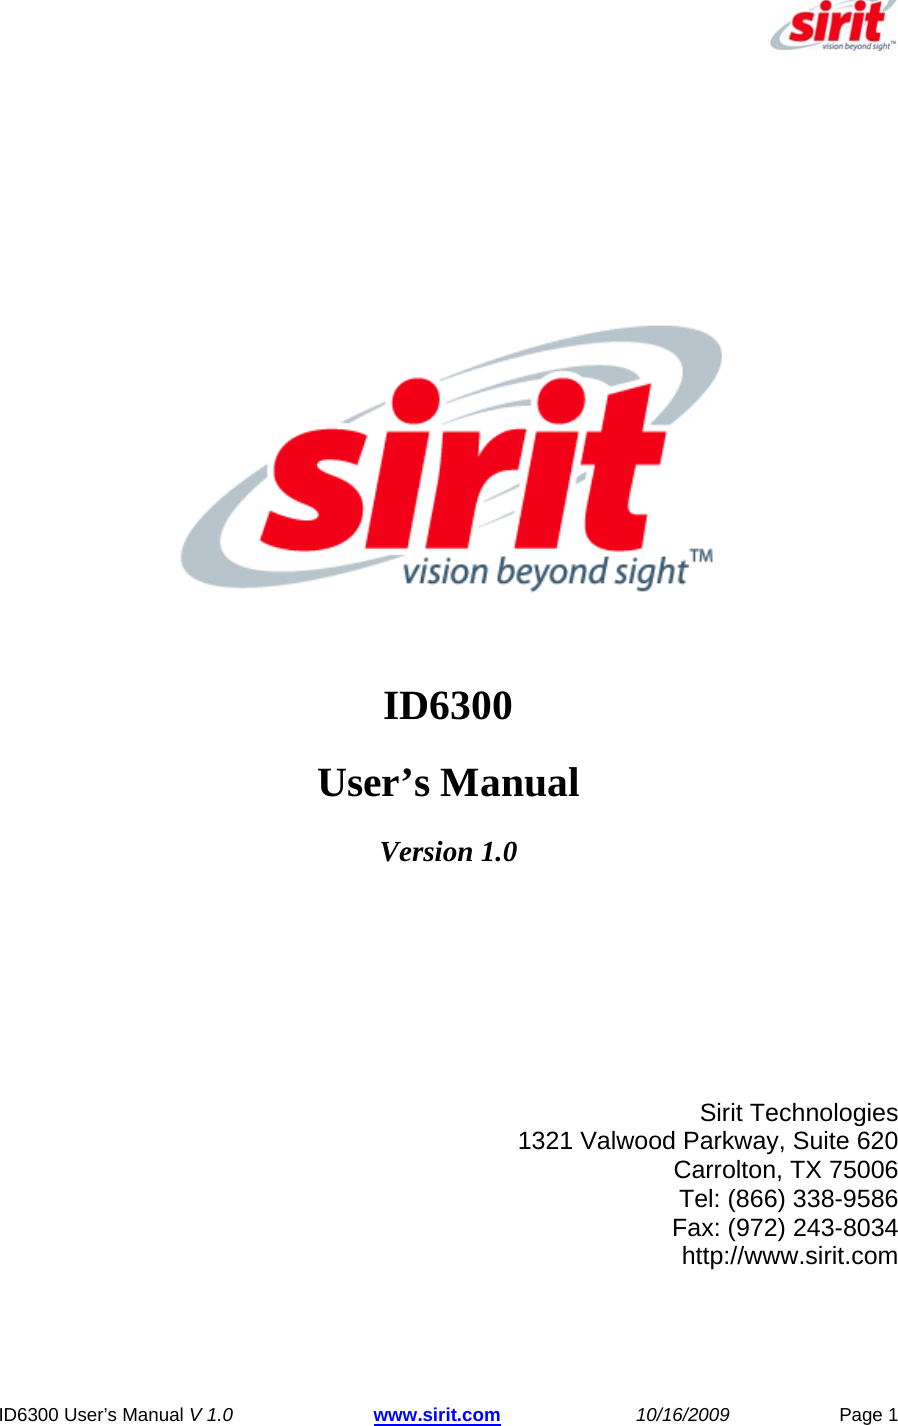  ID6300 User’s Manual V 1.0 www.sirit.com 10/16/2009 Page 1          Multi Protocol RFID Readers  ID6300 User’s Manual Version 1.0        Sirit Technologies   1321 Valwood Parkway, Suite 620  Carrolton, TX 75006  Tel: (866) 338-9586  Fax: (972) 243-8034  http://www.sirit.com  